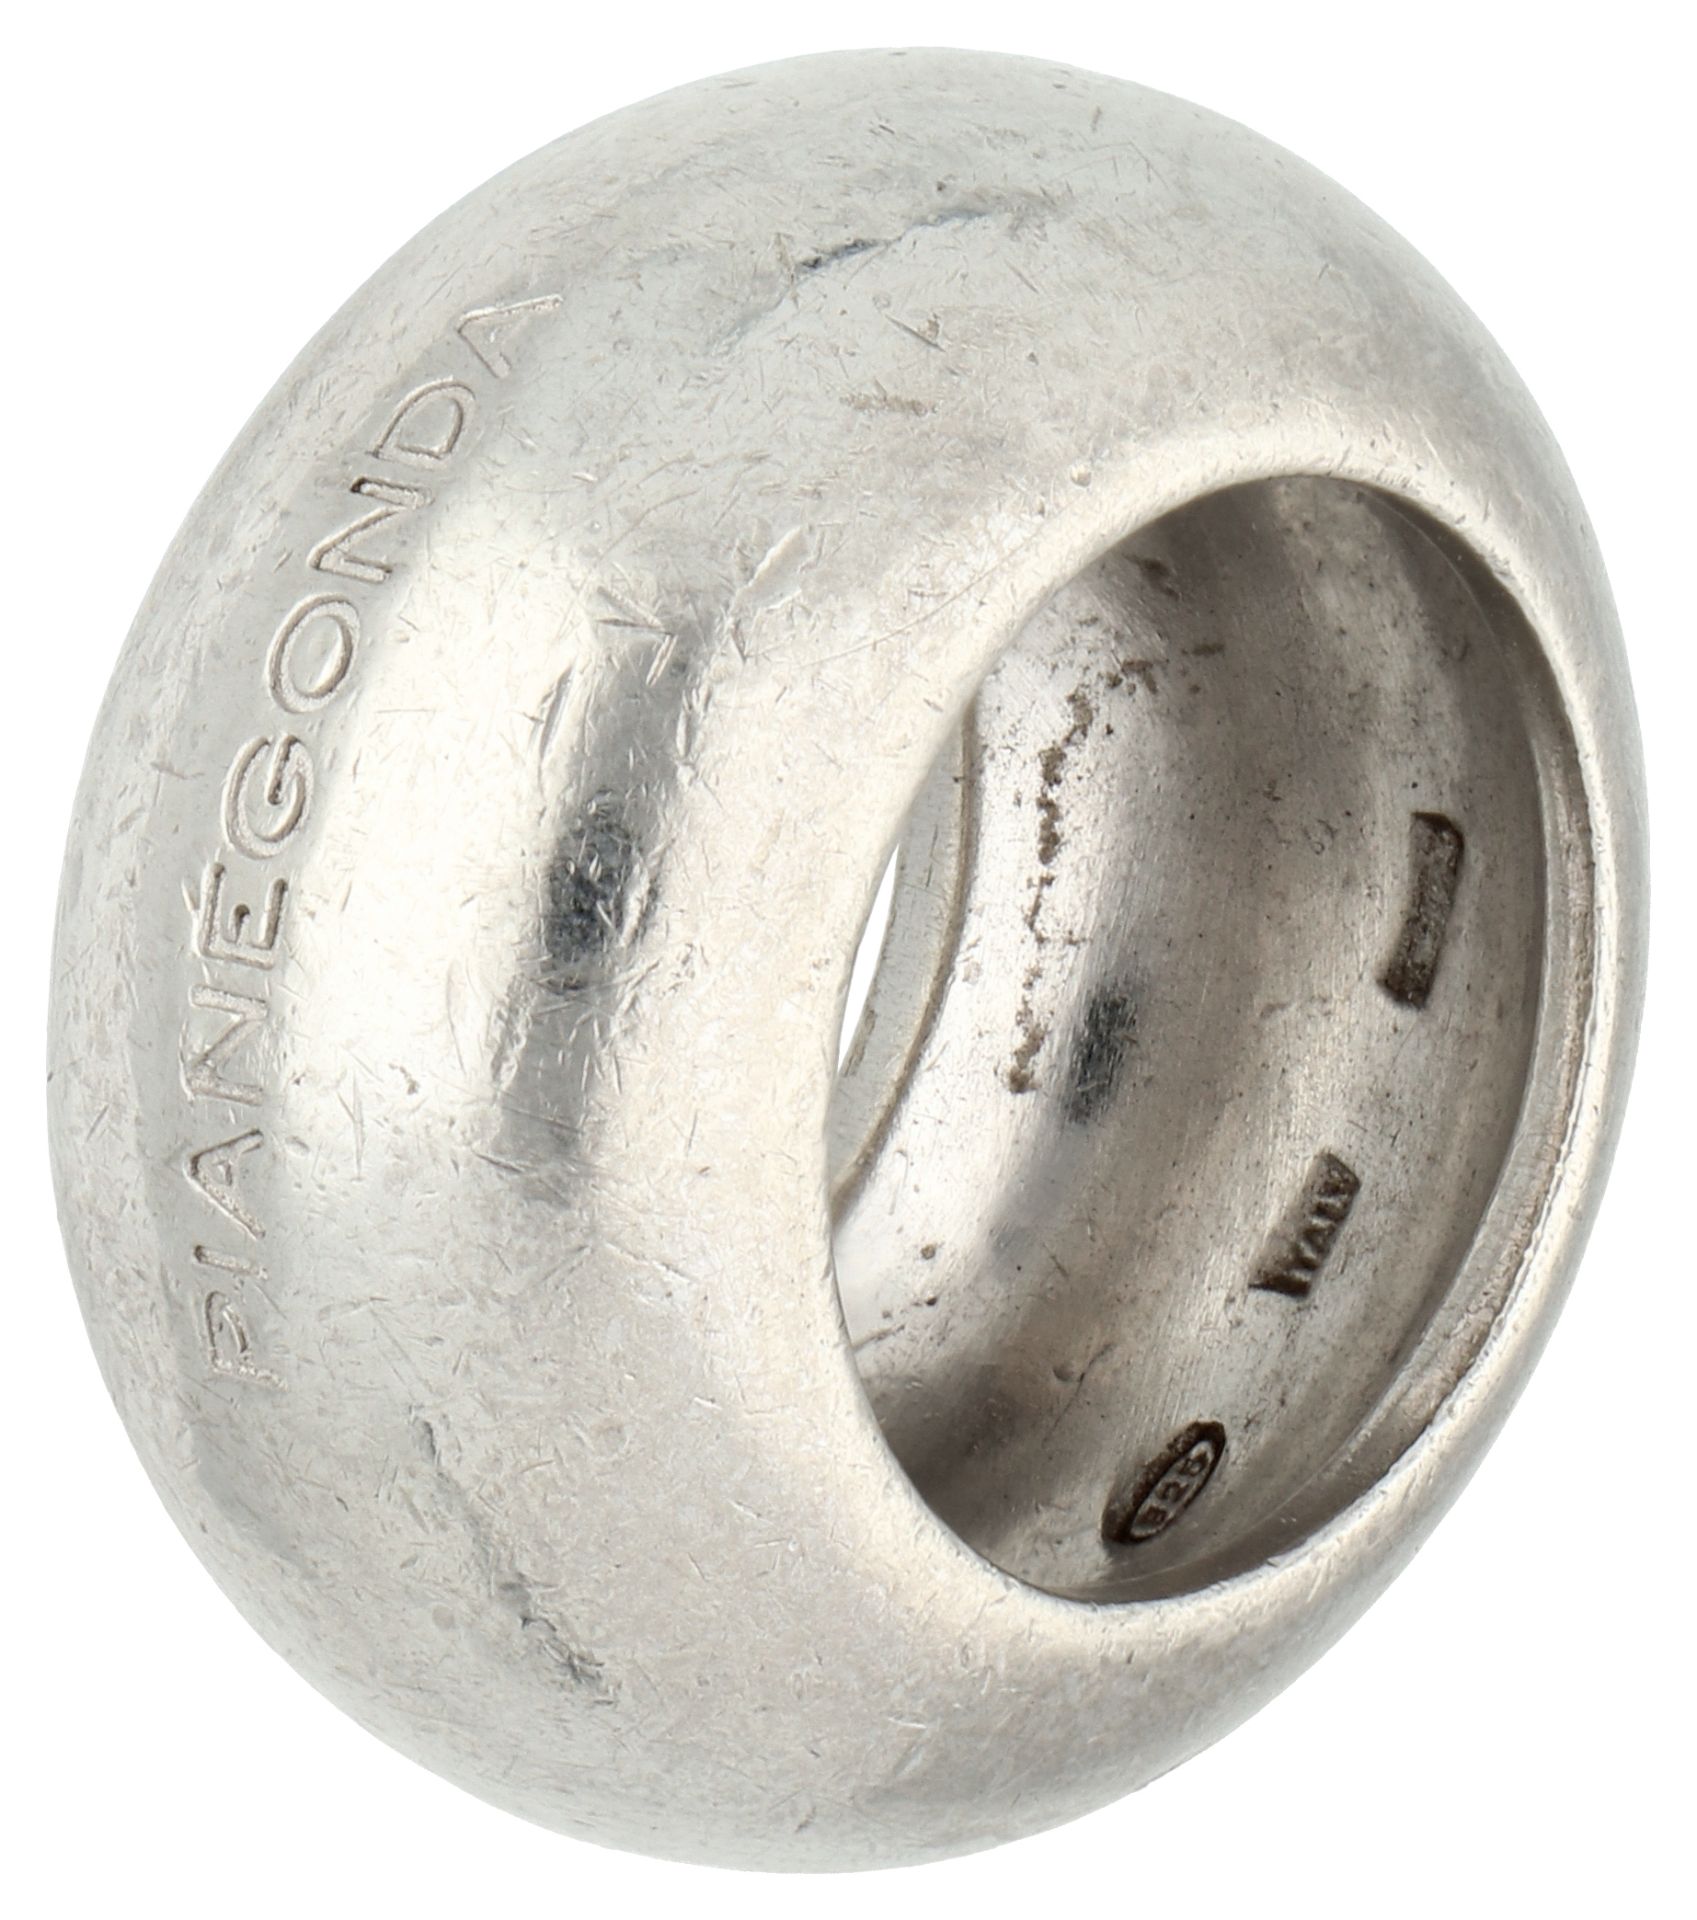 No Reserve - Pianegonda silver ring.